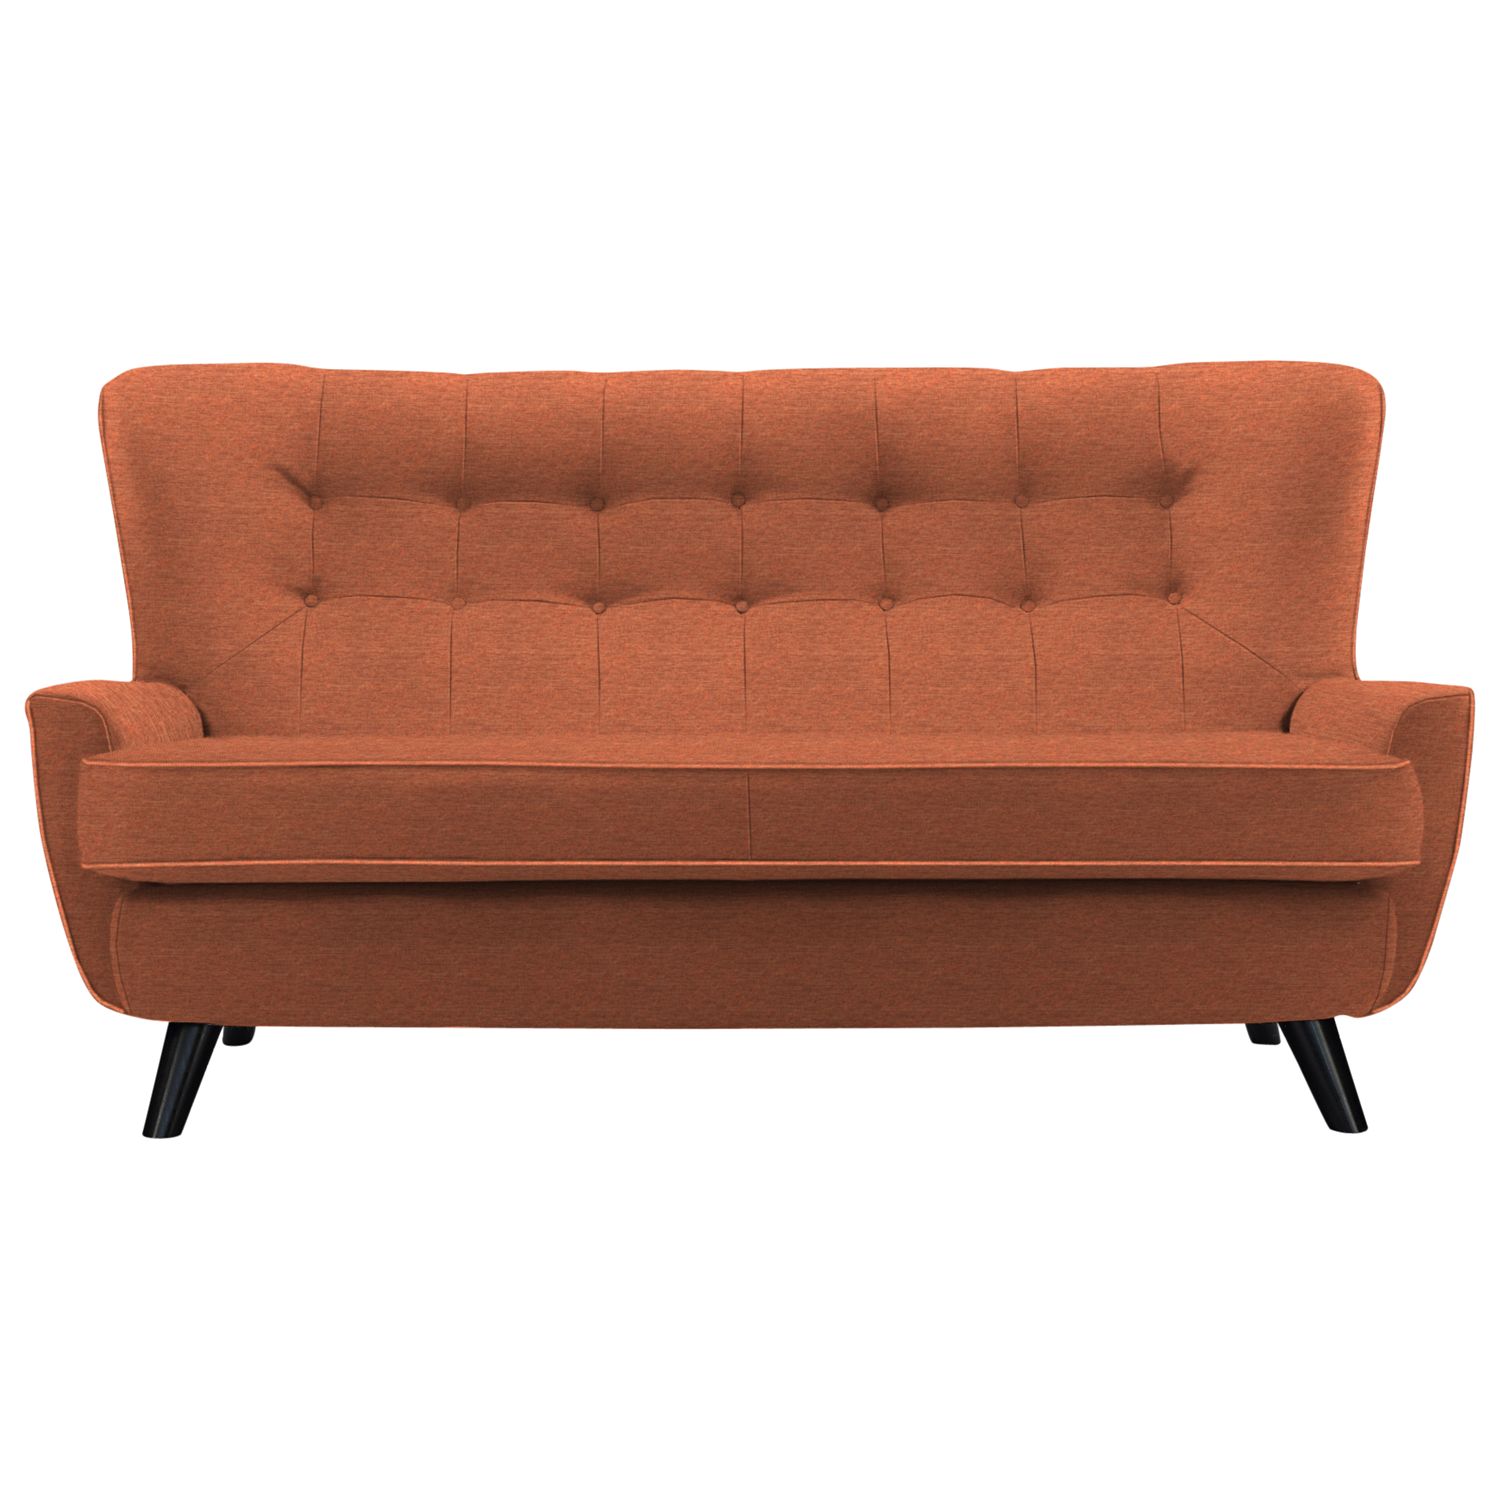 G Plan Vintage The Sixty One Large Sofa, Tonic Orange, width 185cm